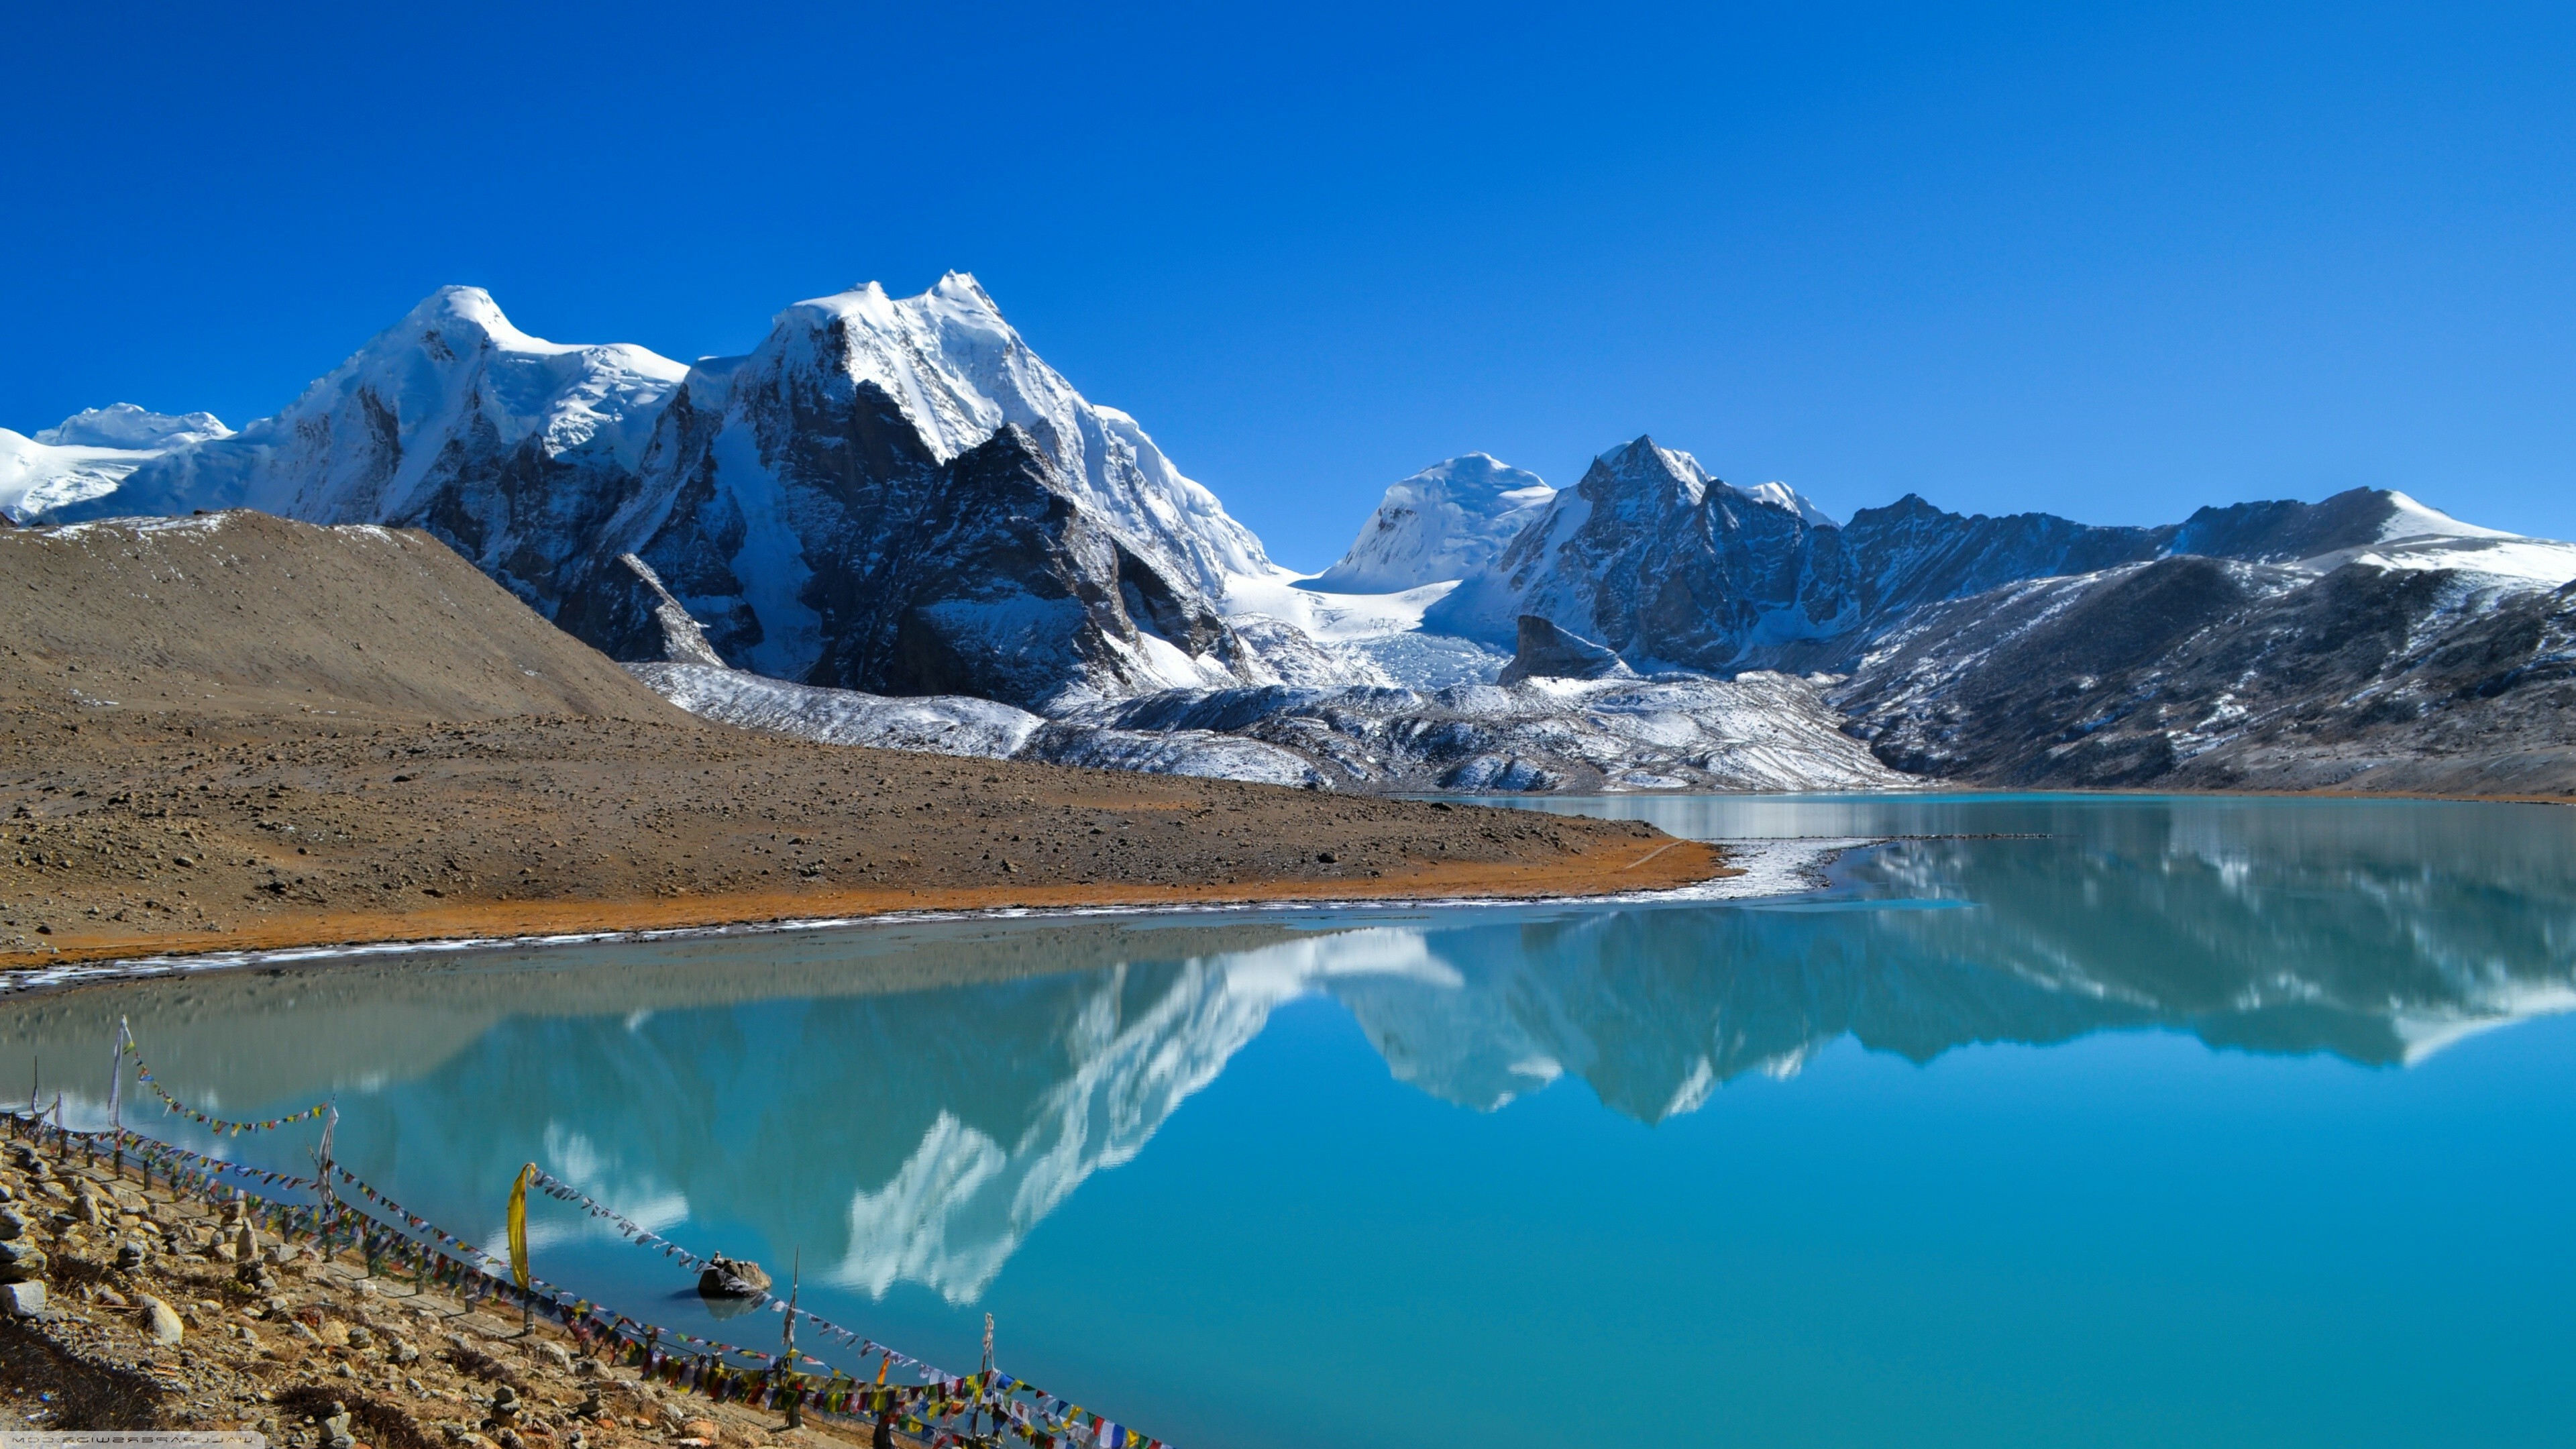 Himalayas: A mountain range in the South Asia, Lake, Landscape. 3840x2160 4K Wallpaper.